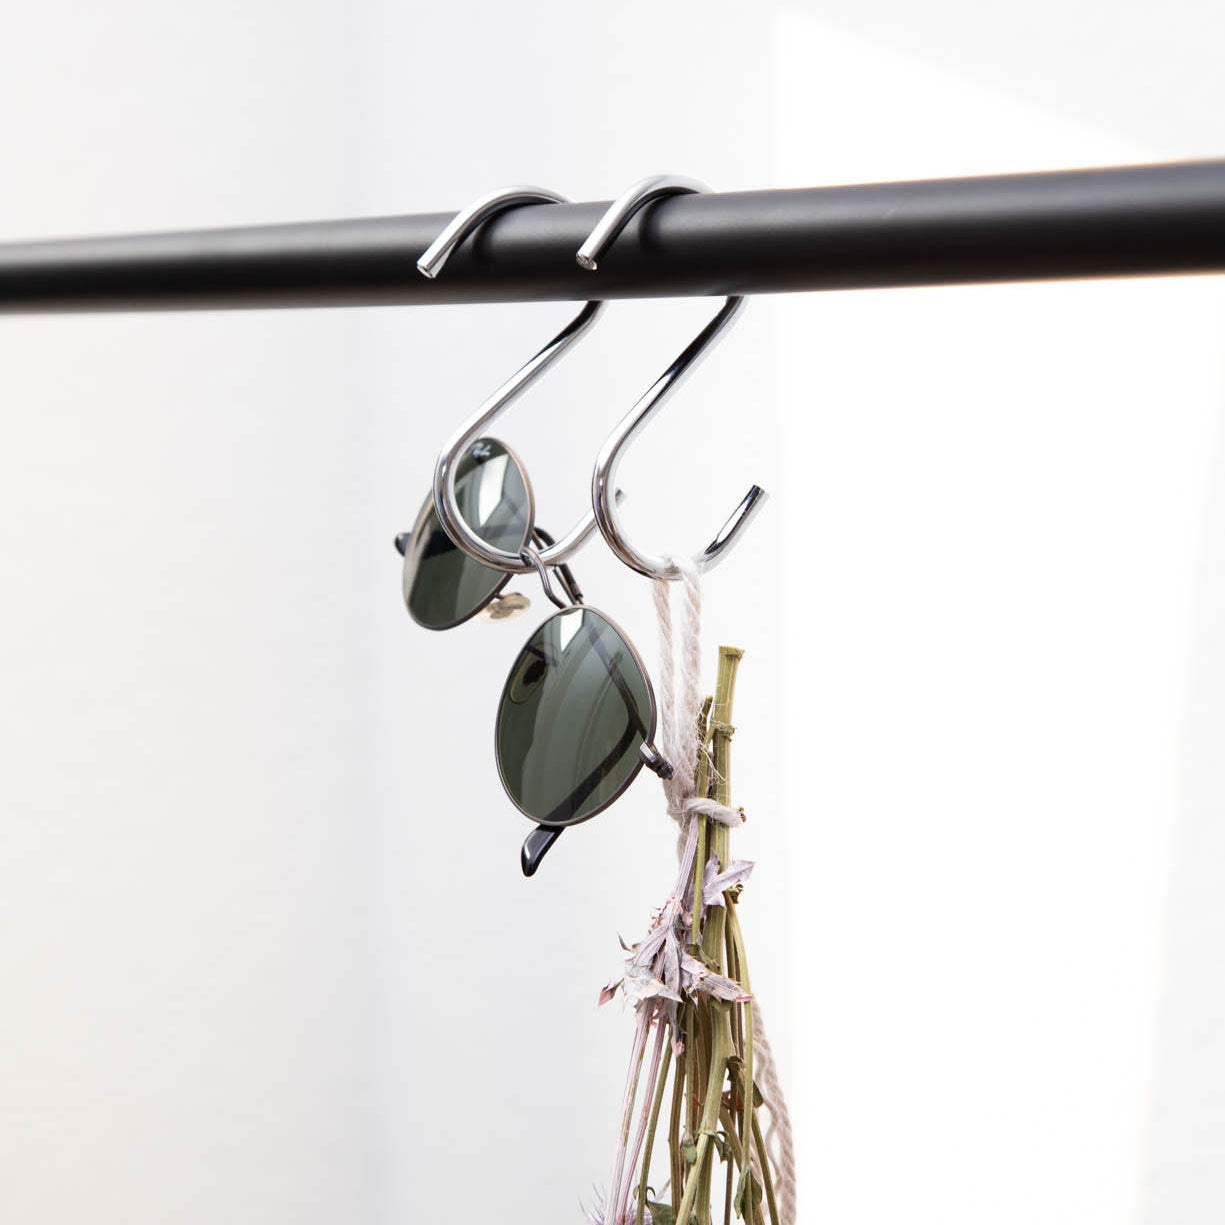 S-hook made of sturdy metal buy online